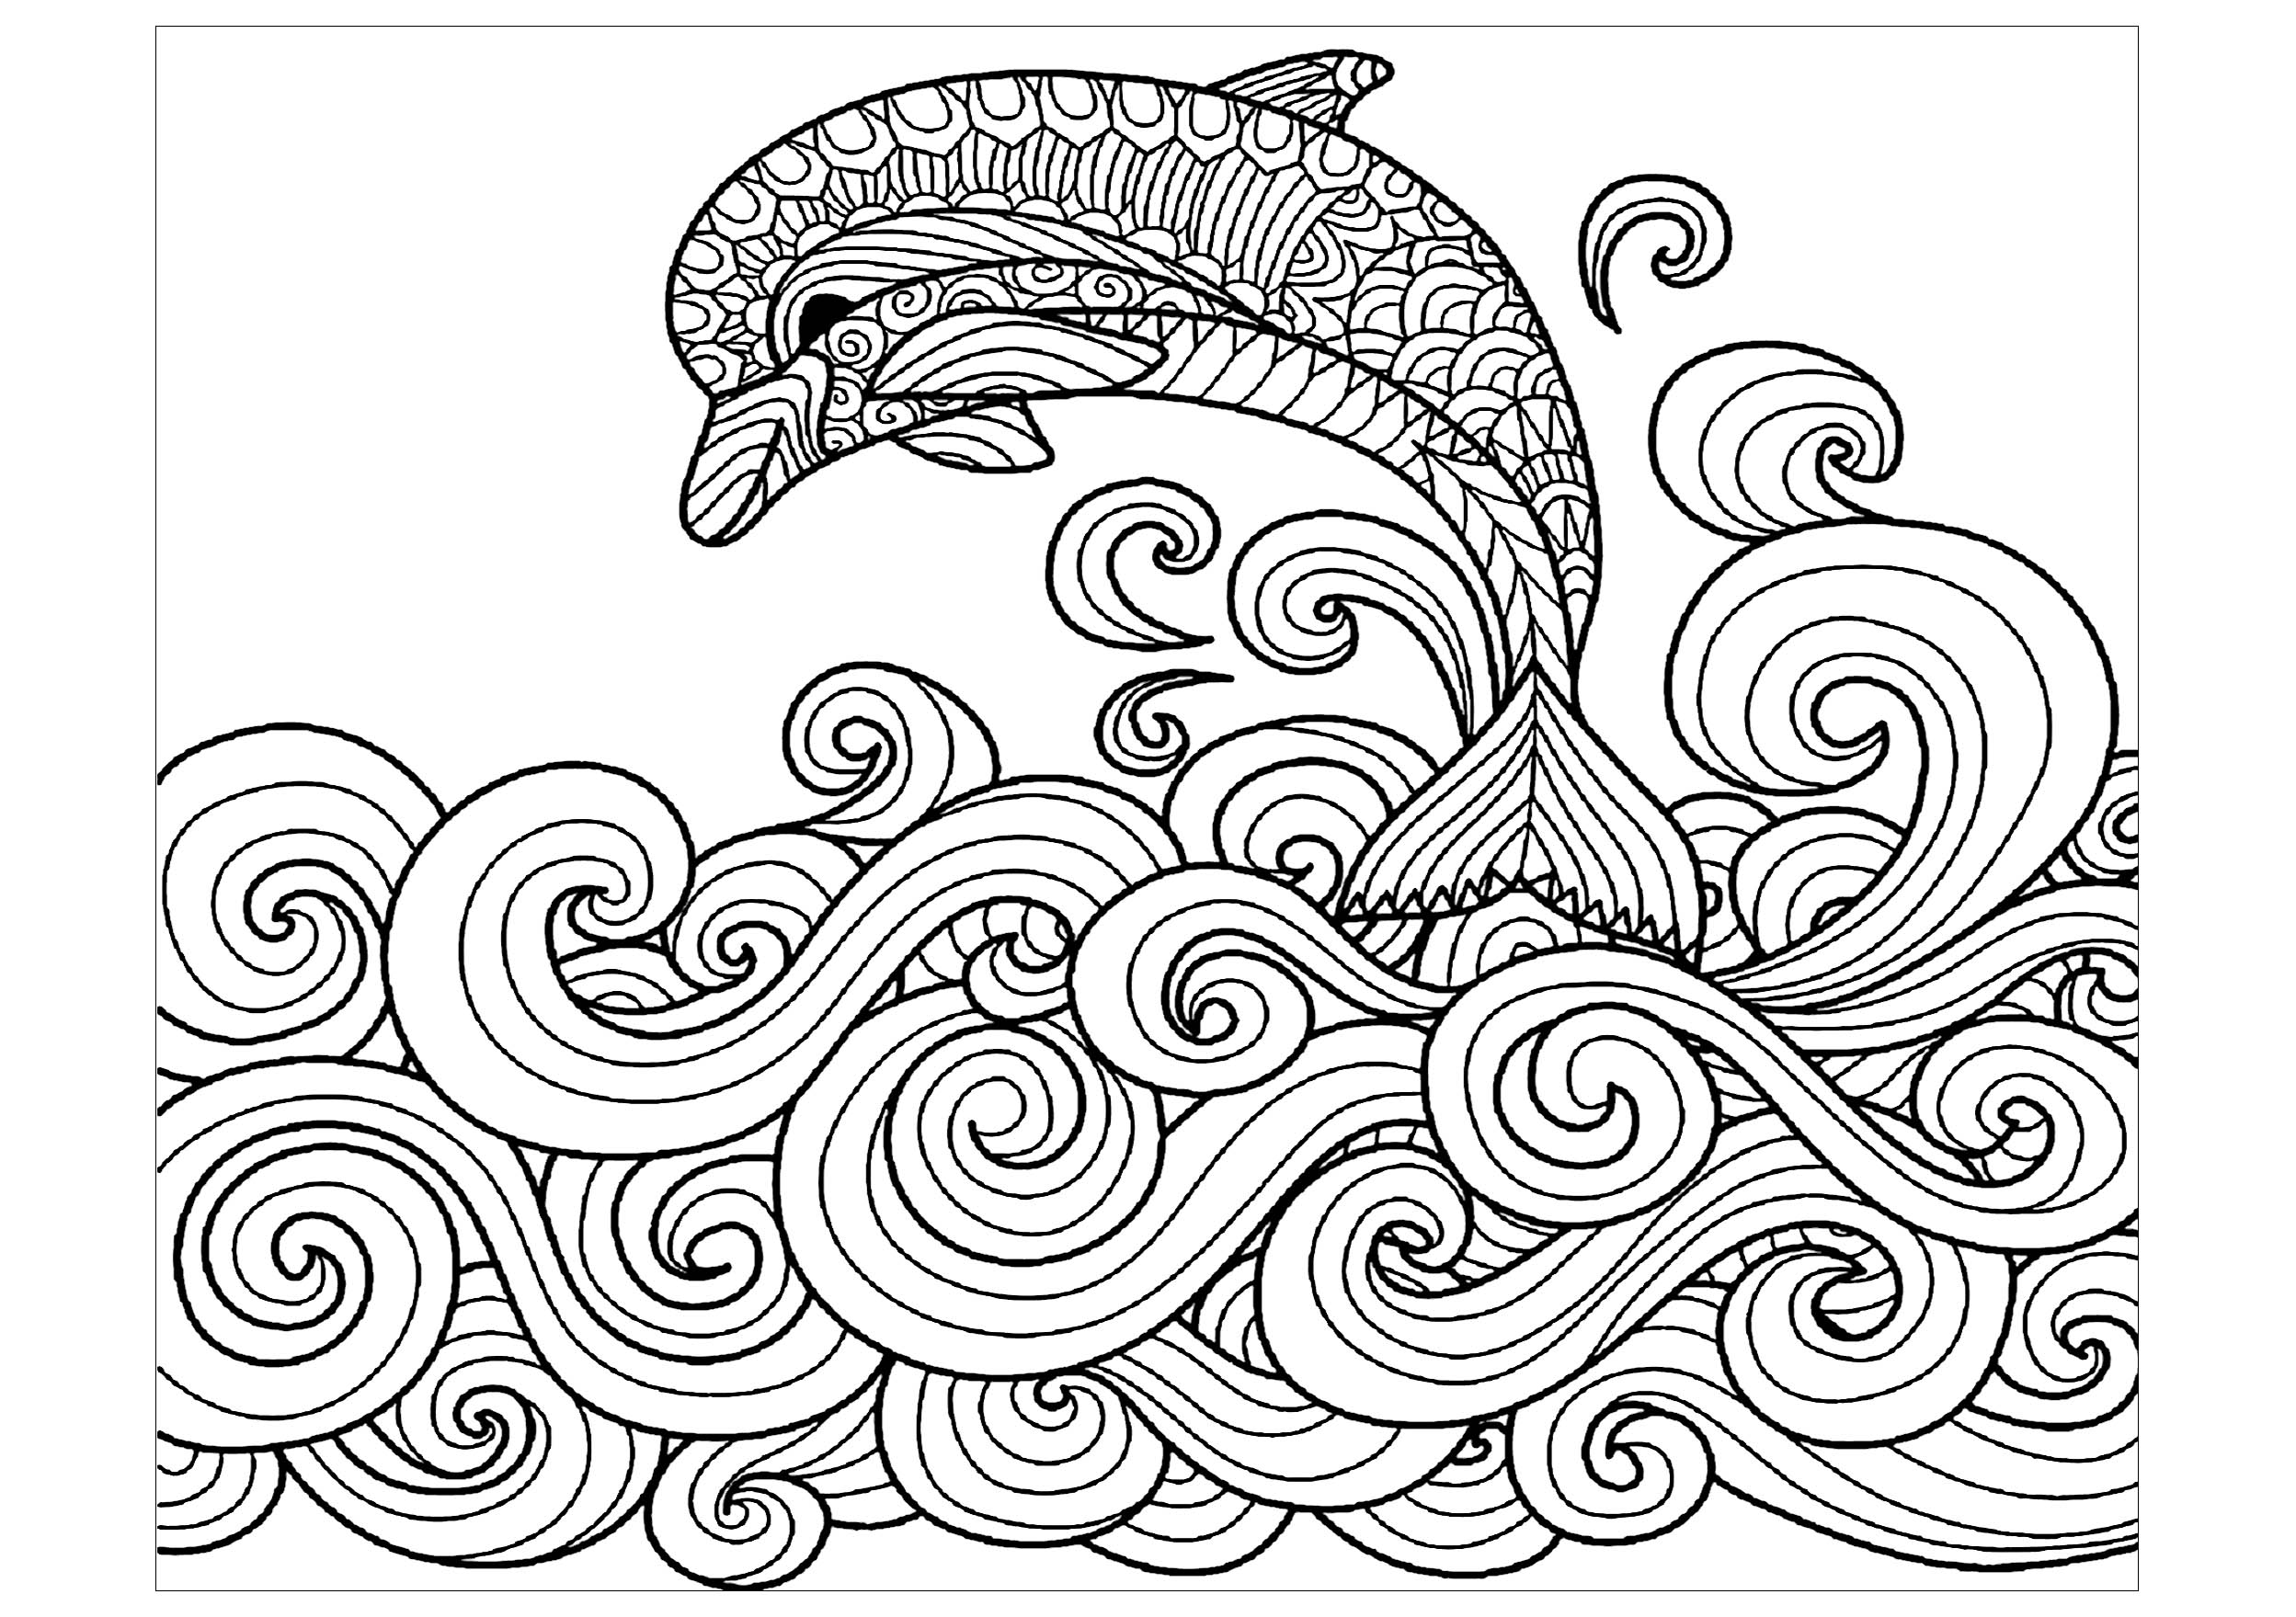 Coloring page : Dolphins - 1, Artist : Bimdeedee   Source : 123rf